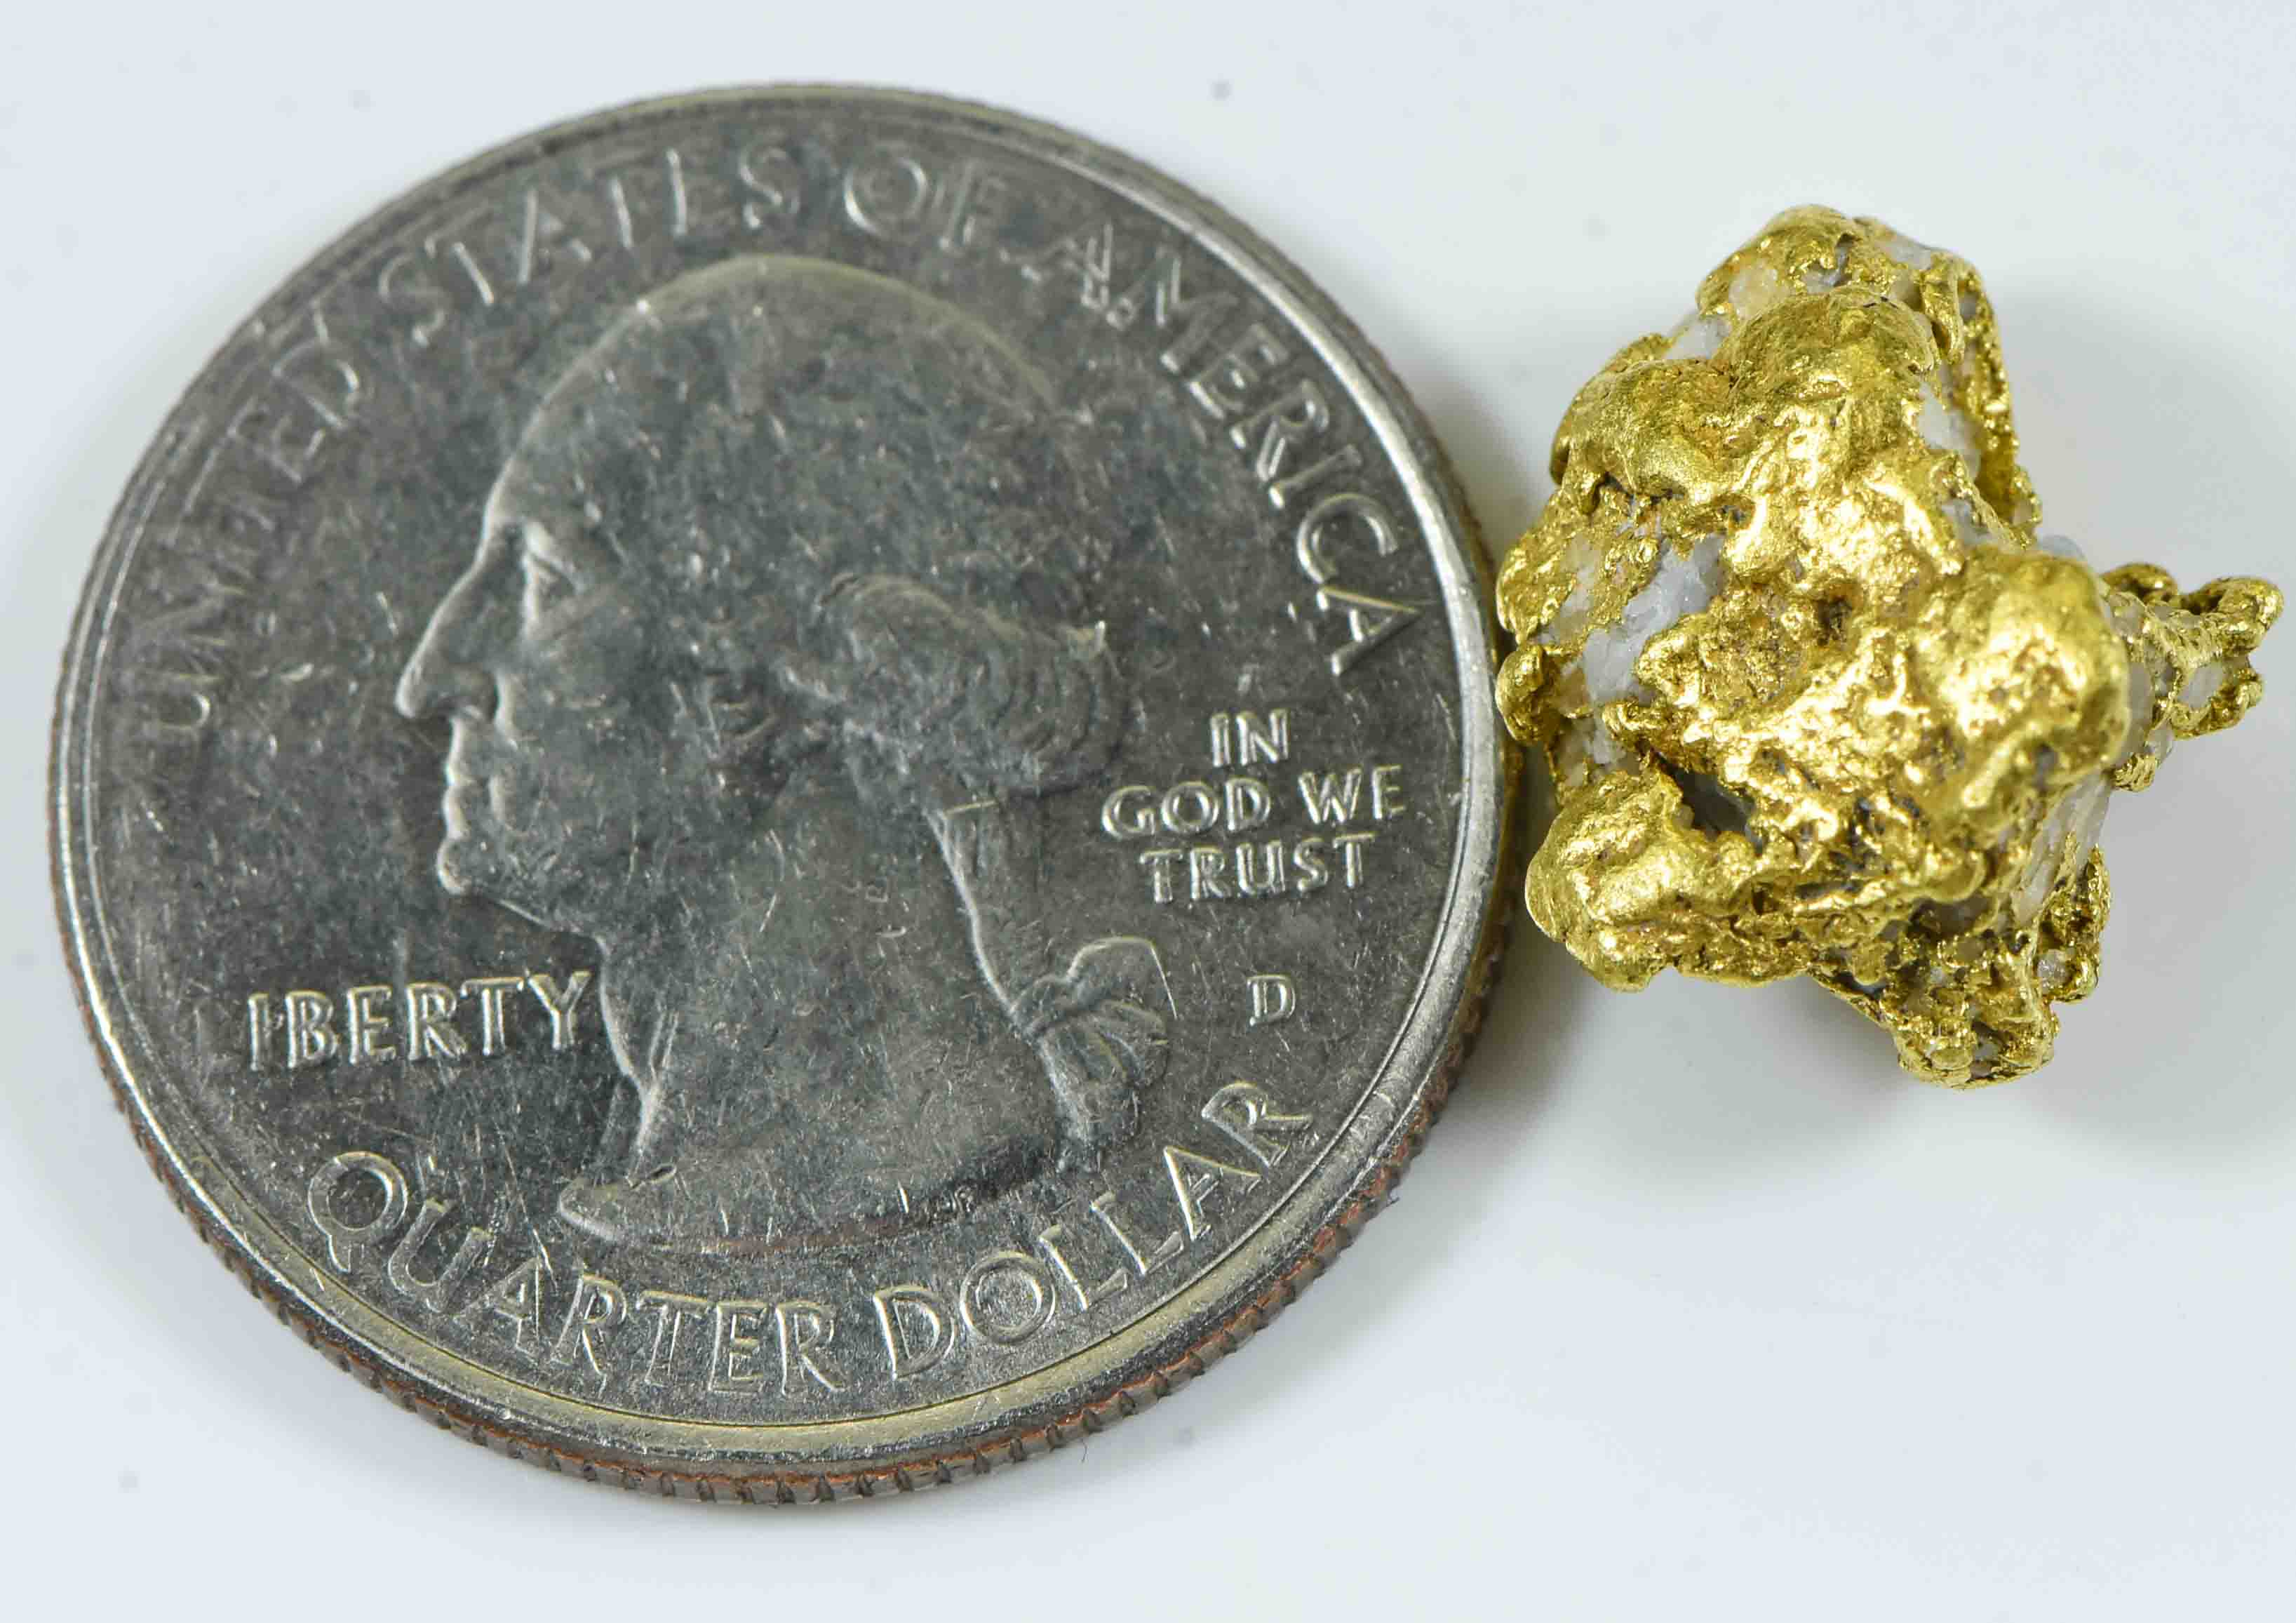 QN-102 "Alaskan BC Gold Nuggets with Quartz" Genuine 5.25 Grams